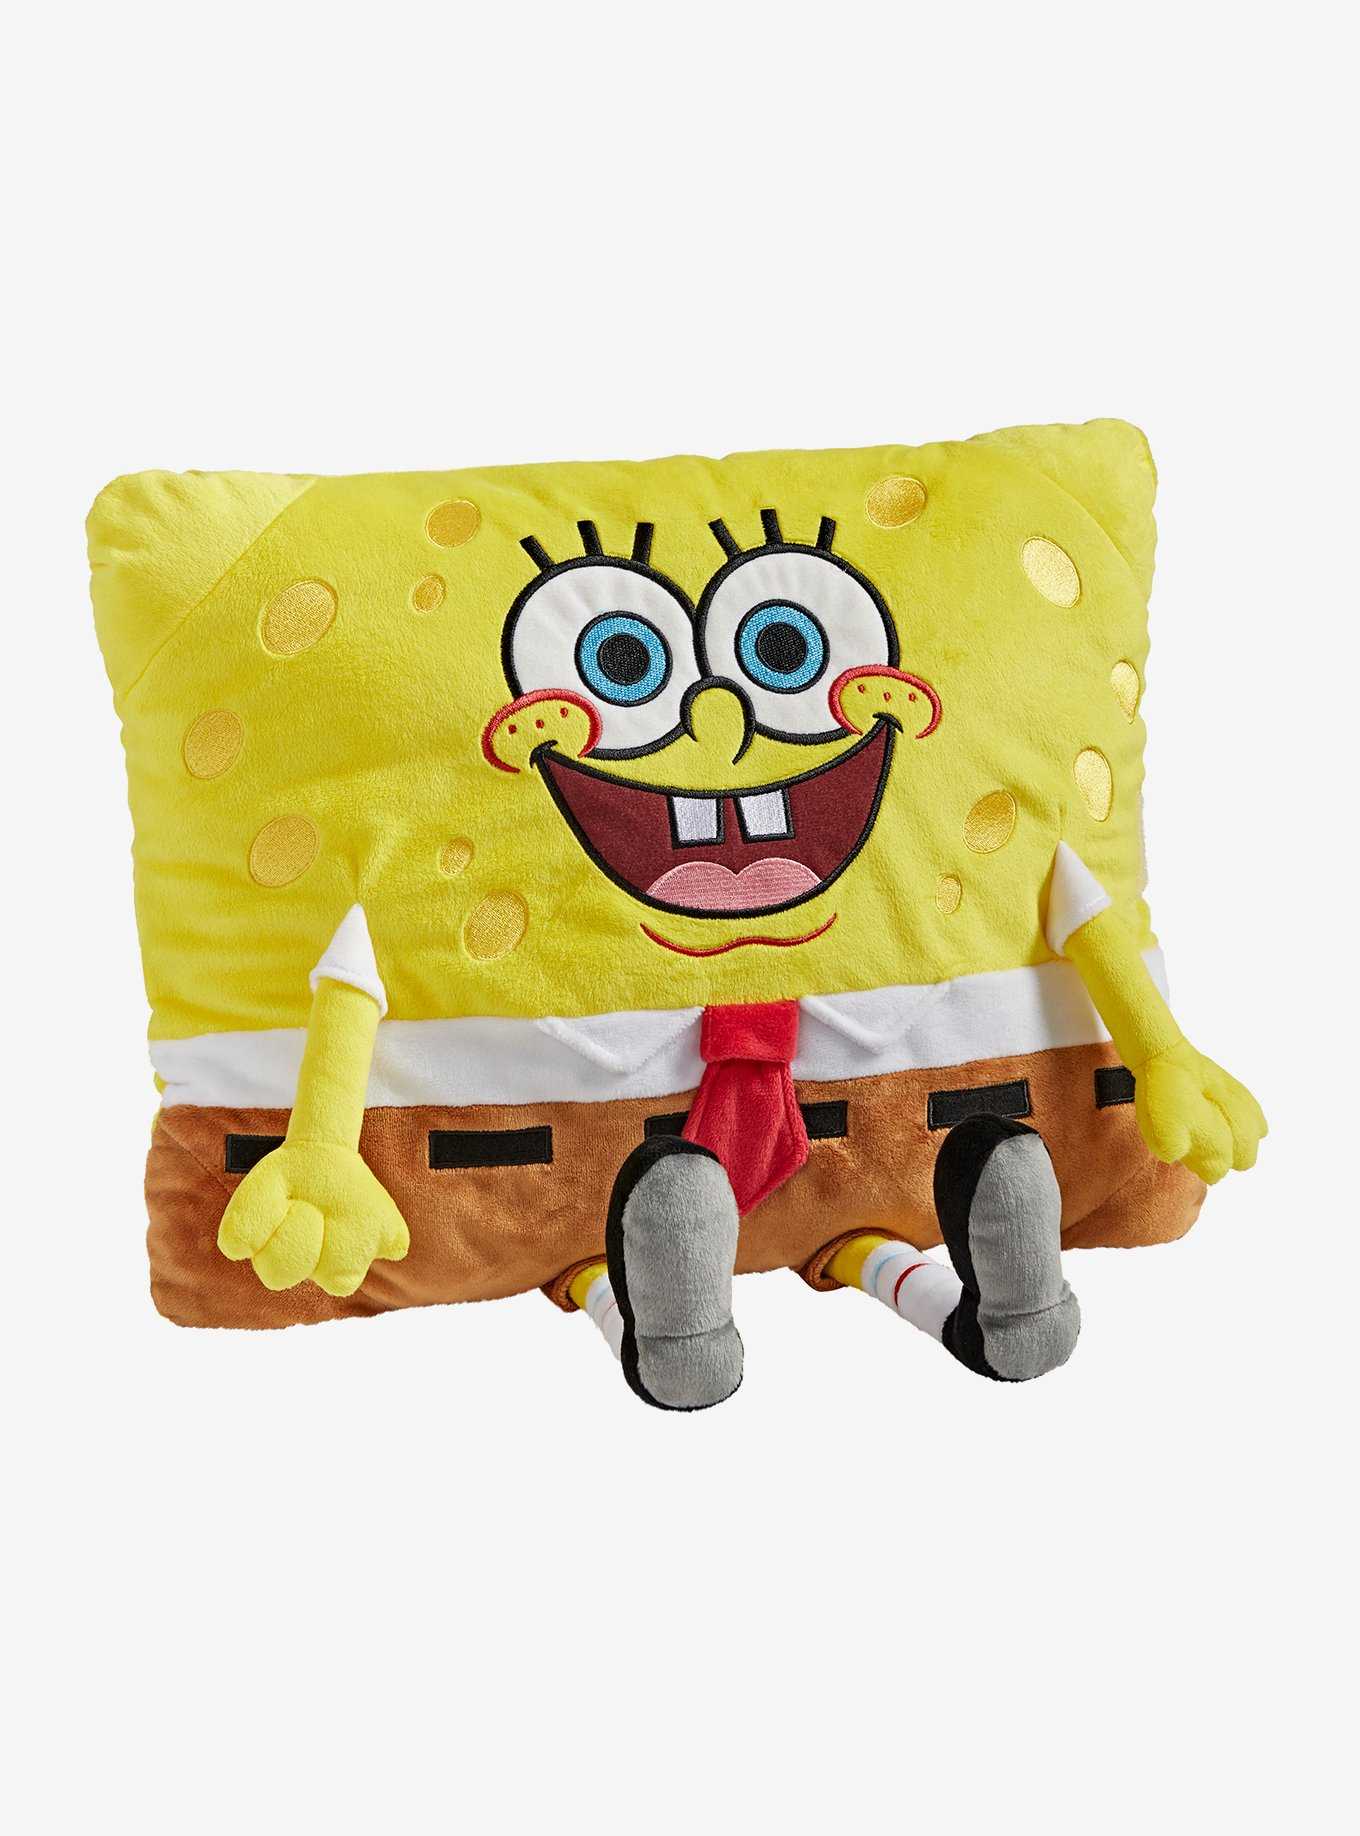 Spongebob Square Pants Bob Pillow Pets Plush Toy, , hi-res